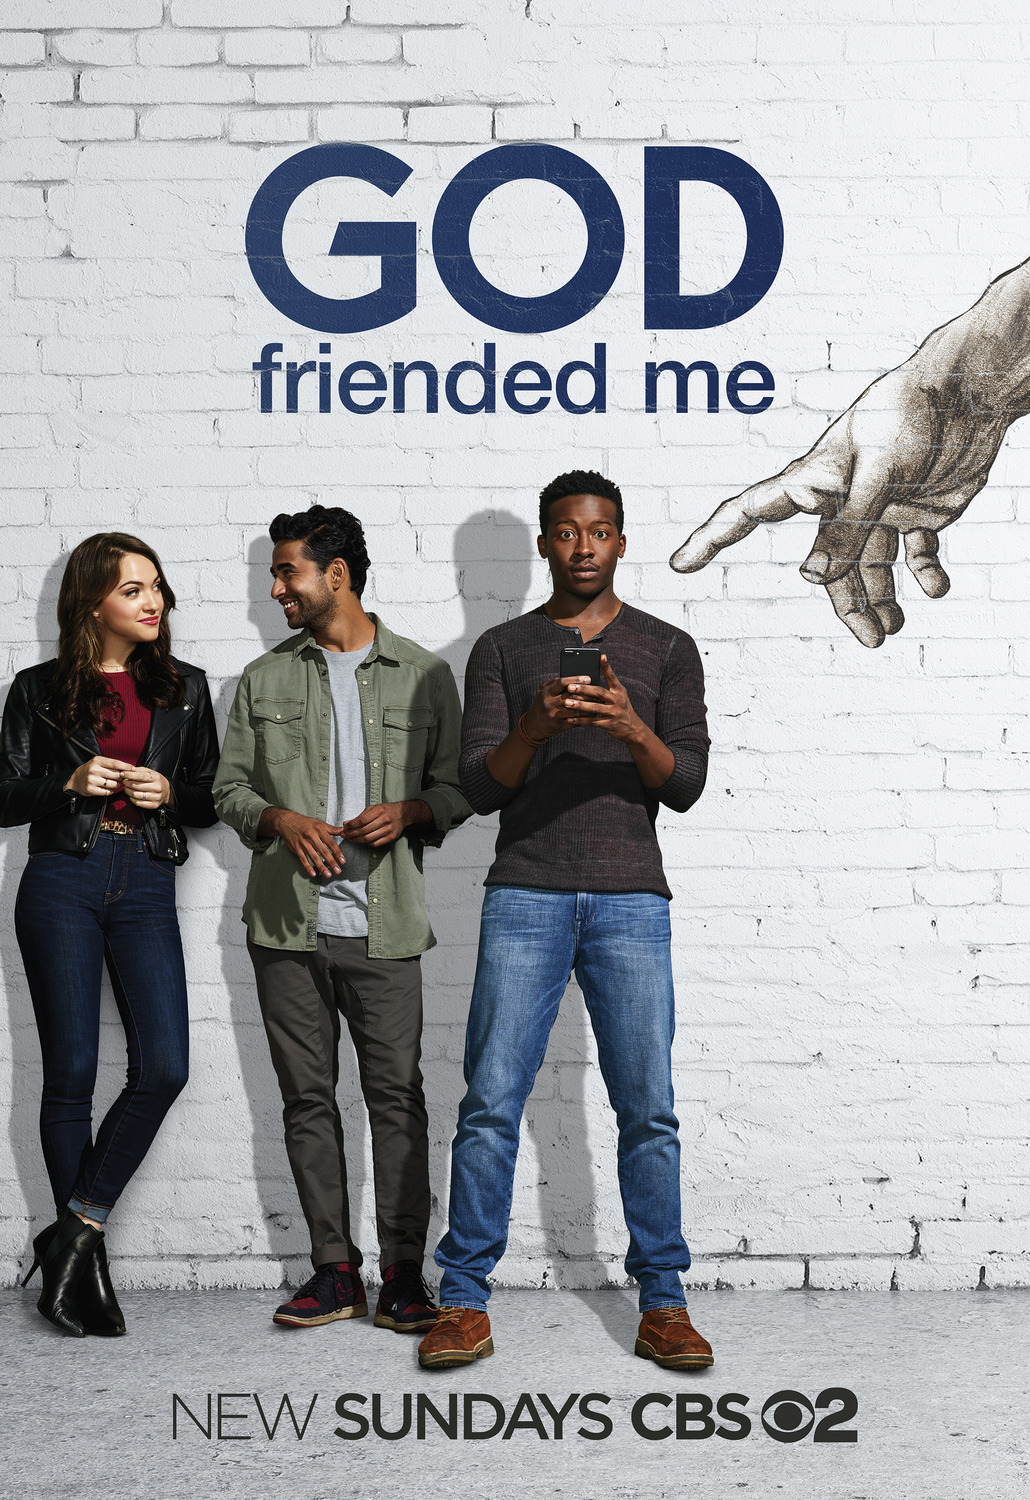 https://media.kg-portal.ru/tv/g/godfriendedme/posters/godfriendedme_2.jpg